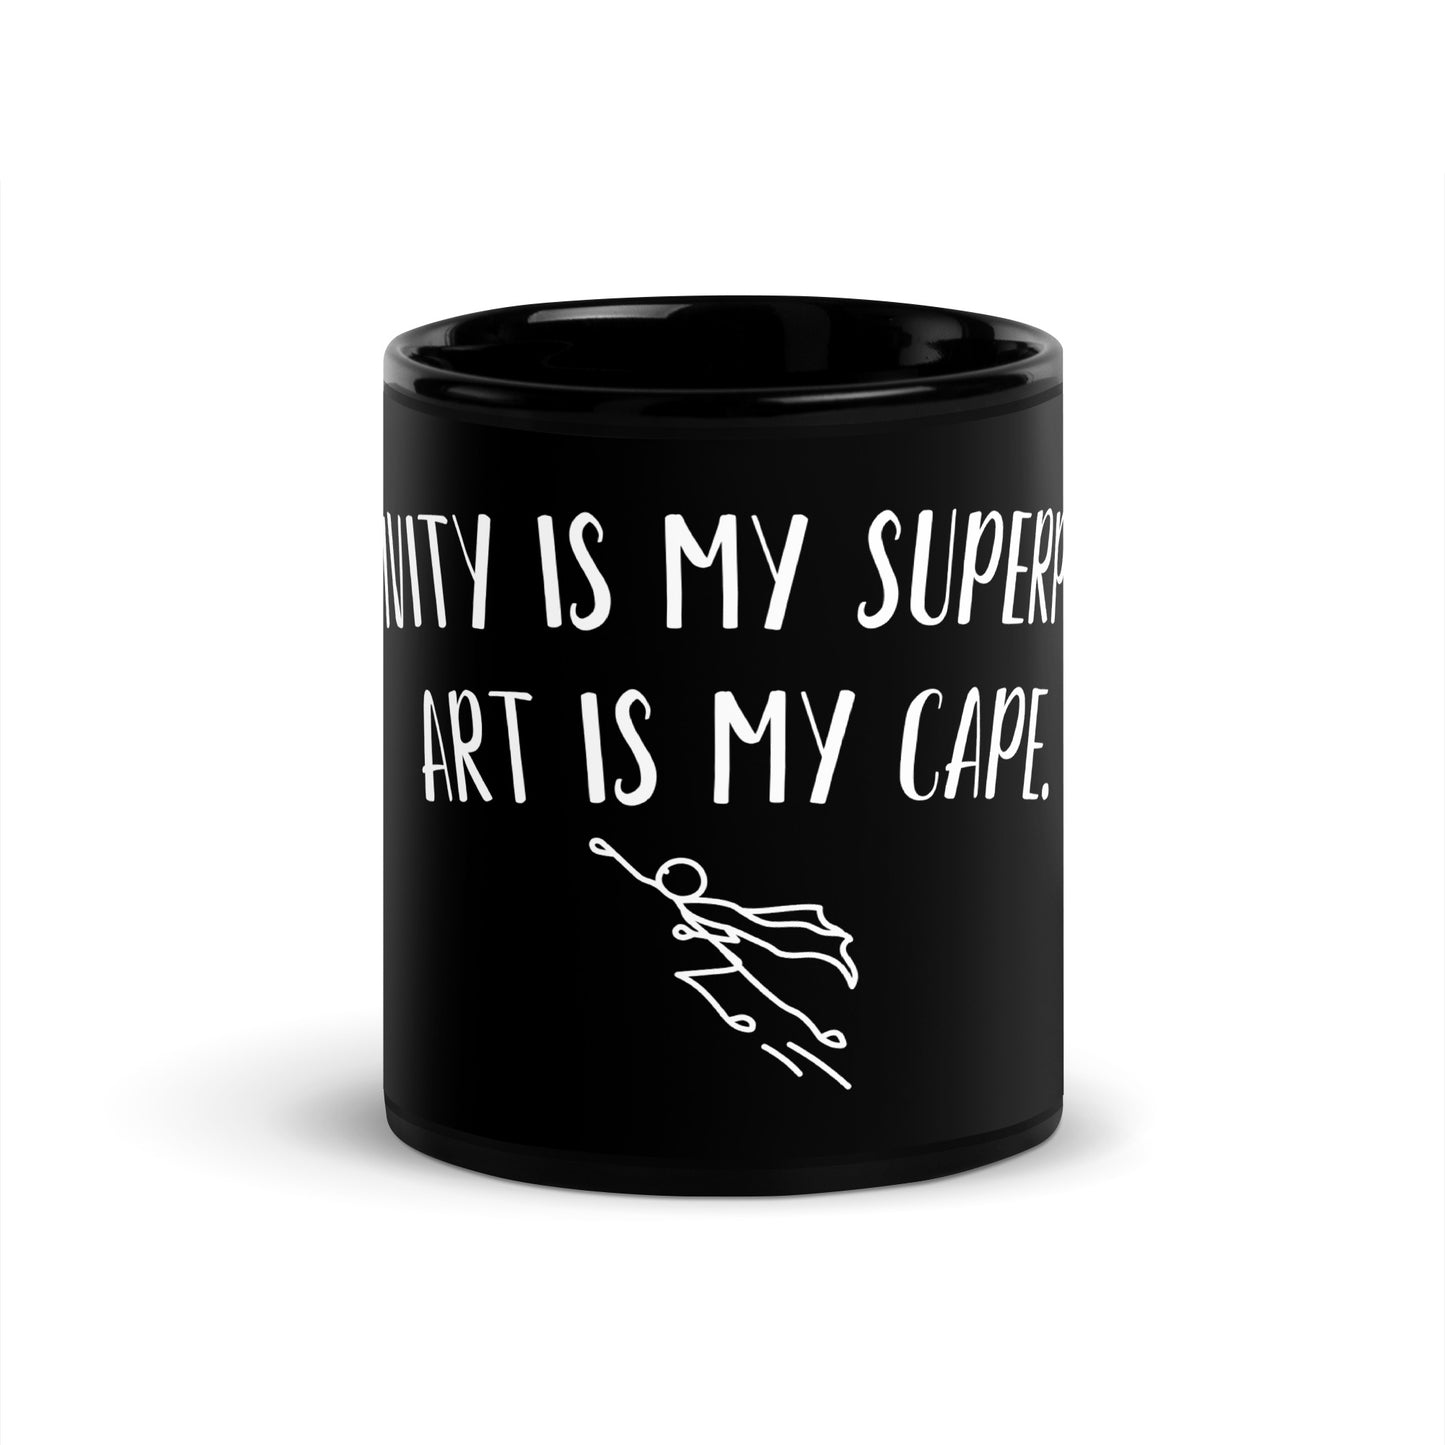 “Creativity is my superpower, art is my cape.” - Glossy Mug